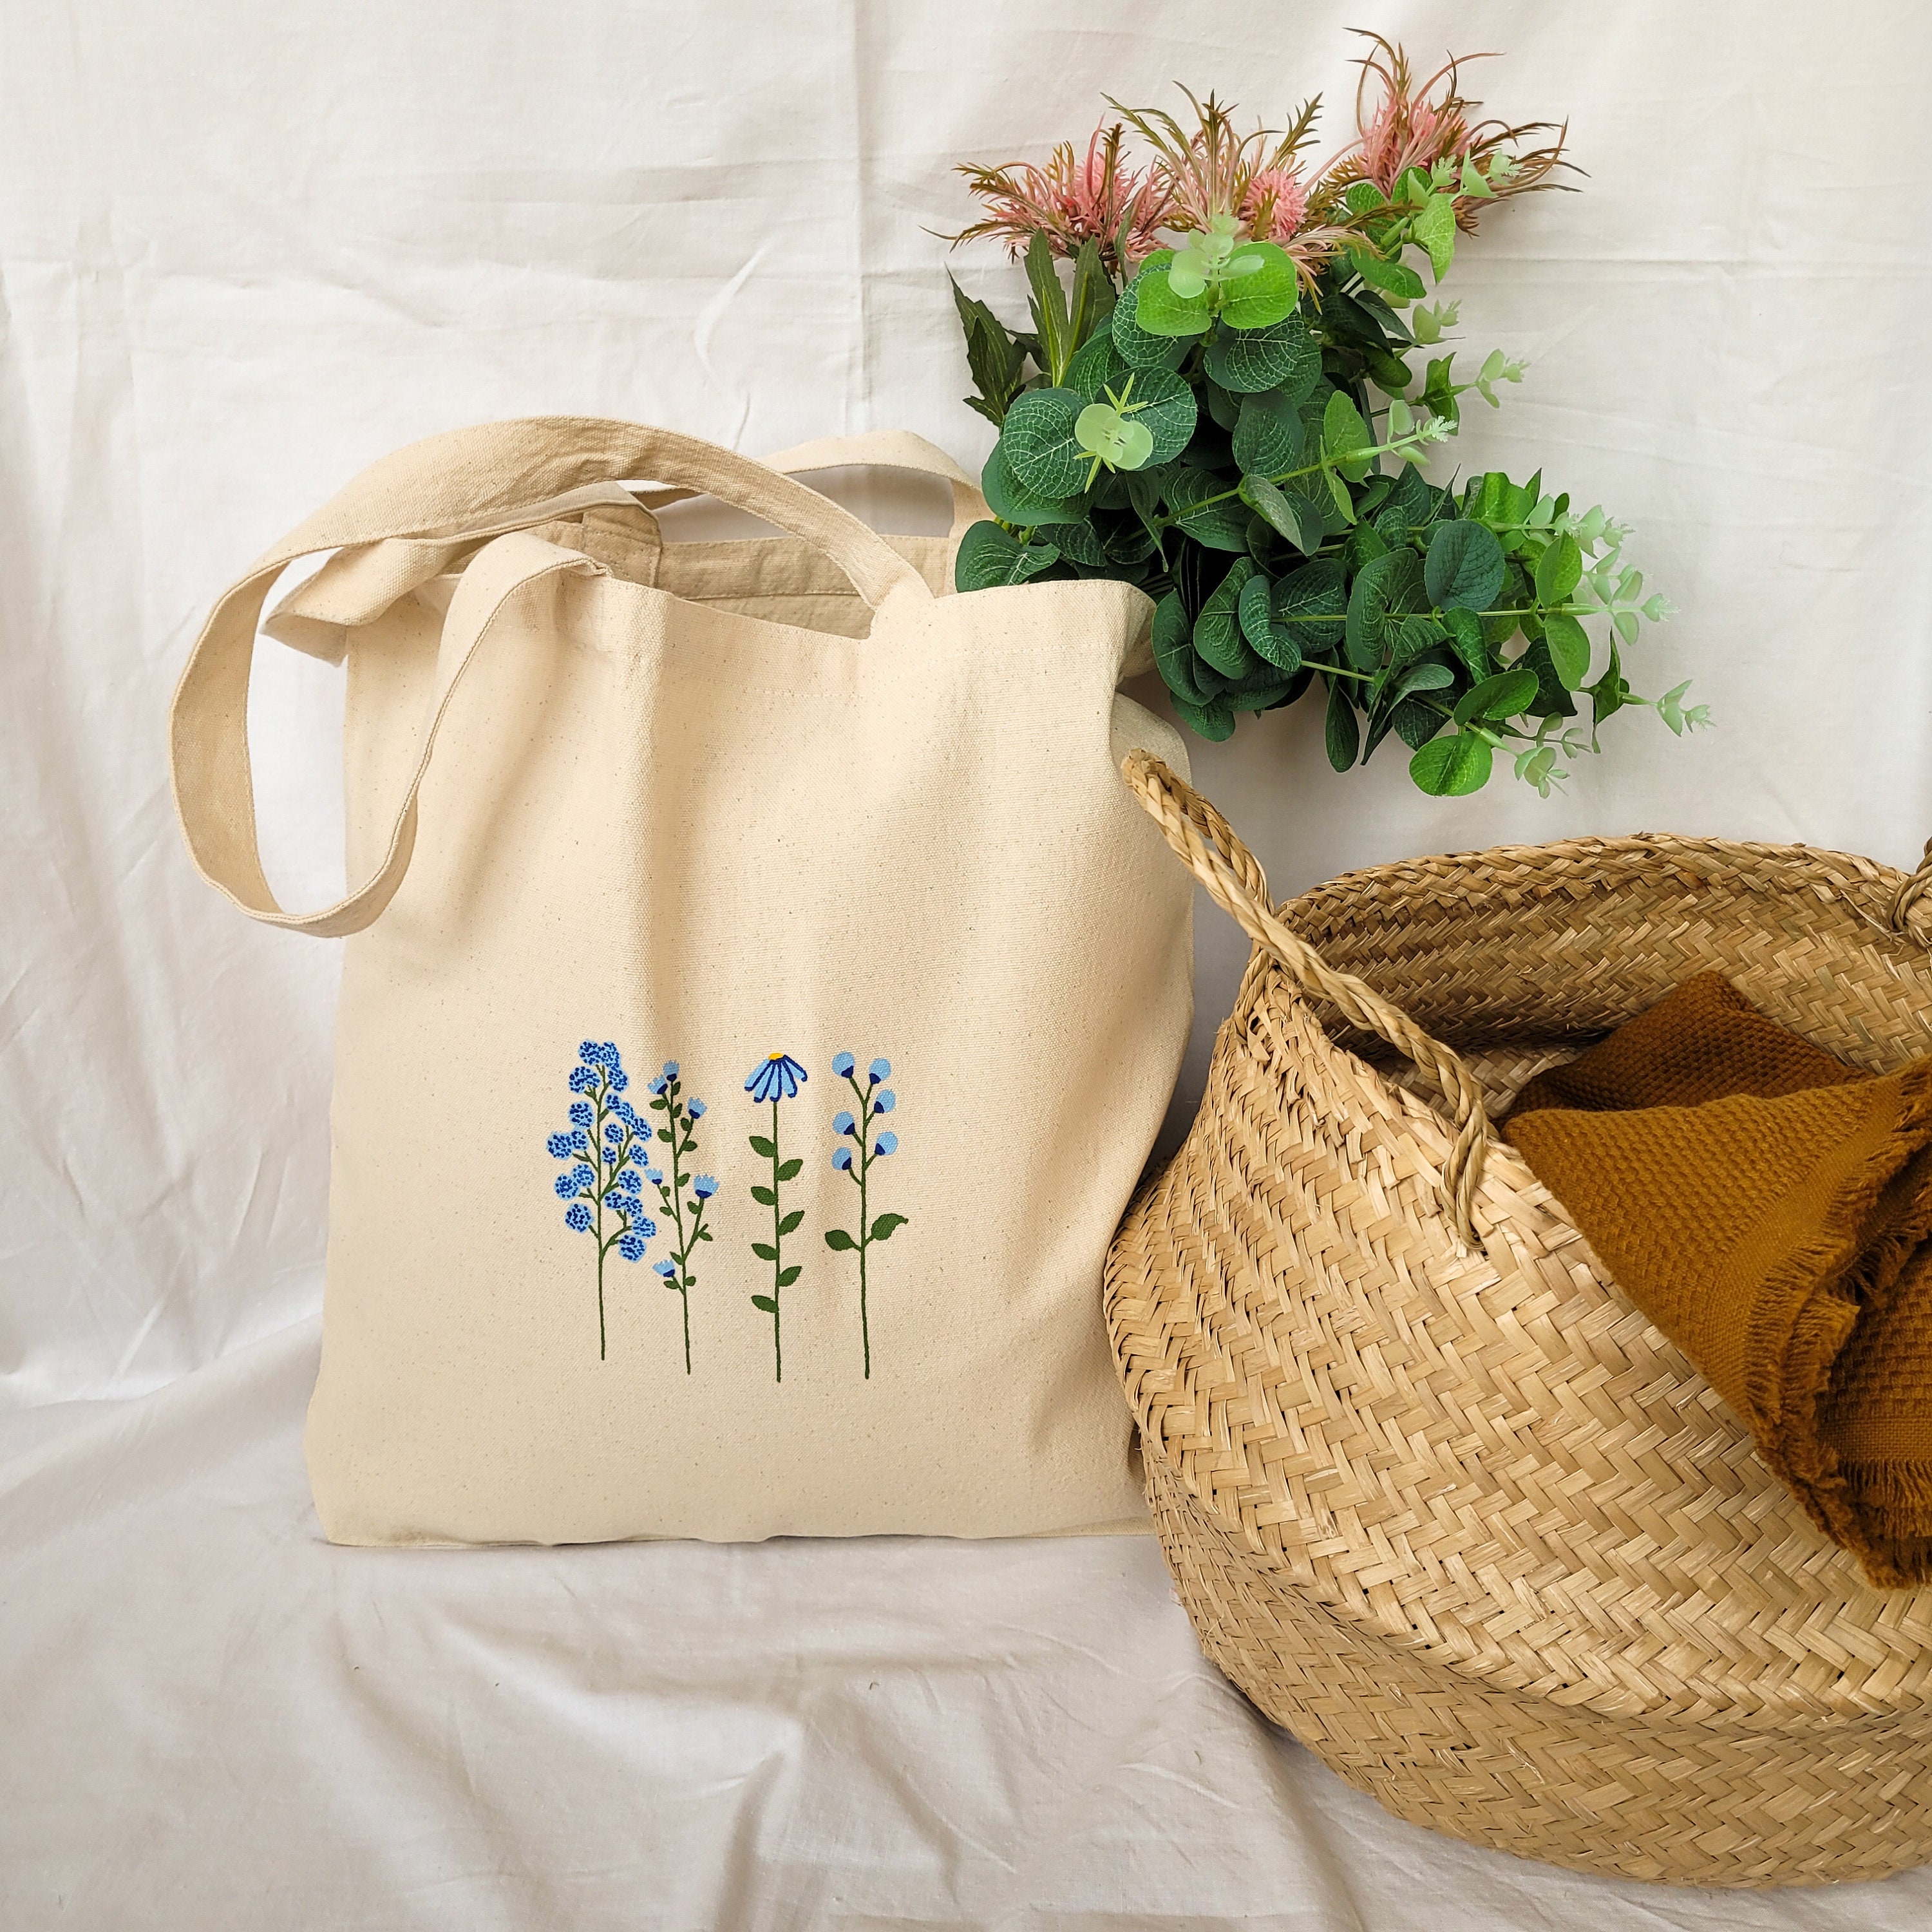 Floral Tote Bag Flower Tote Bag Aesthetic Cloth Bag Bag -  Israel